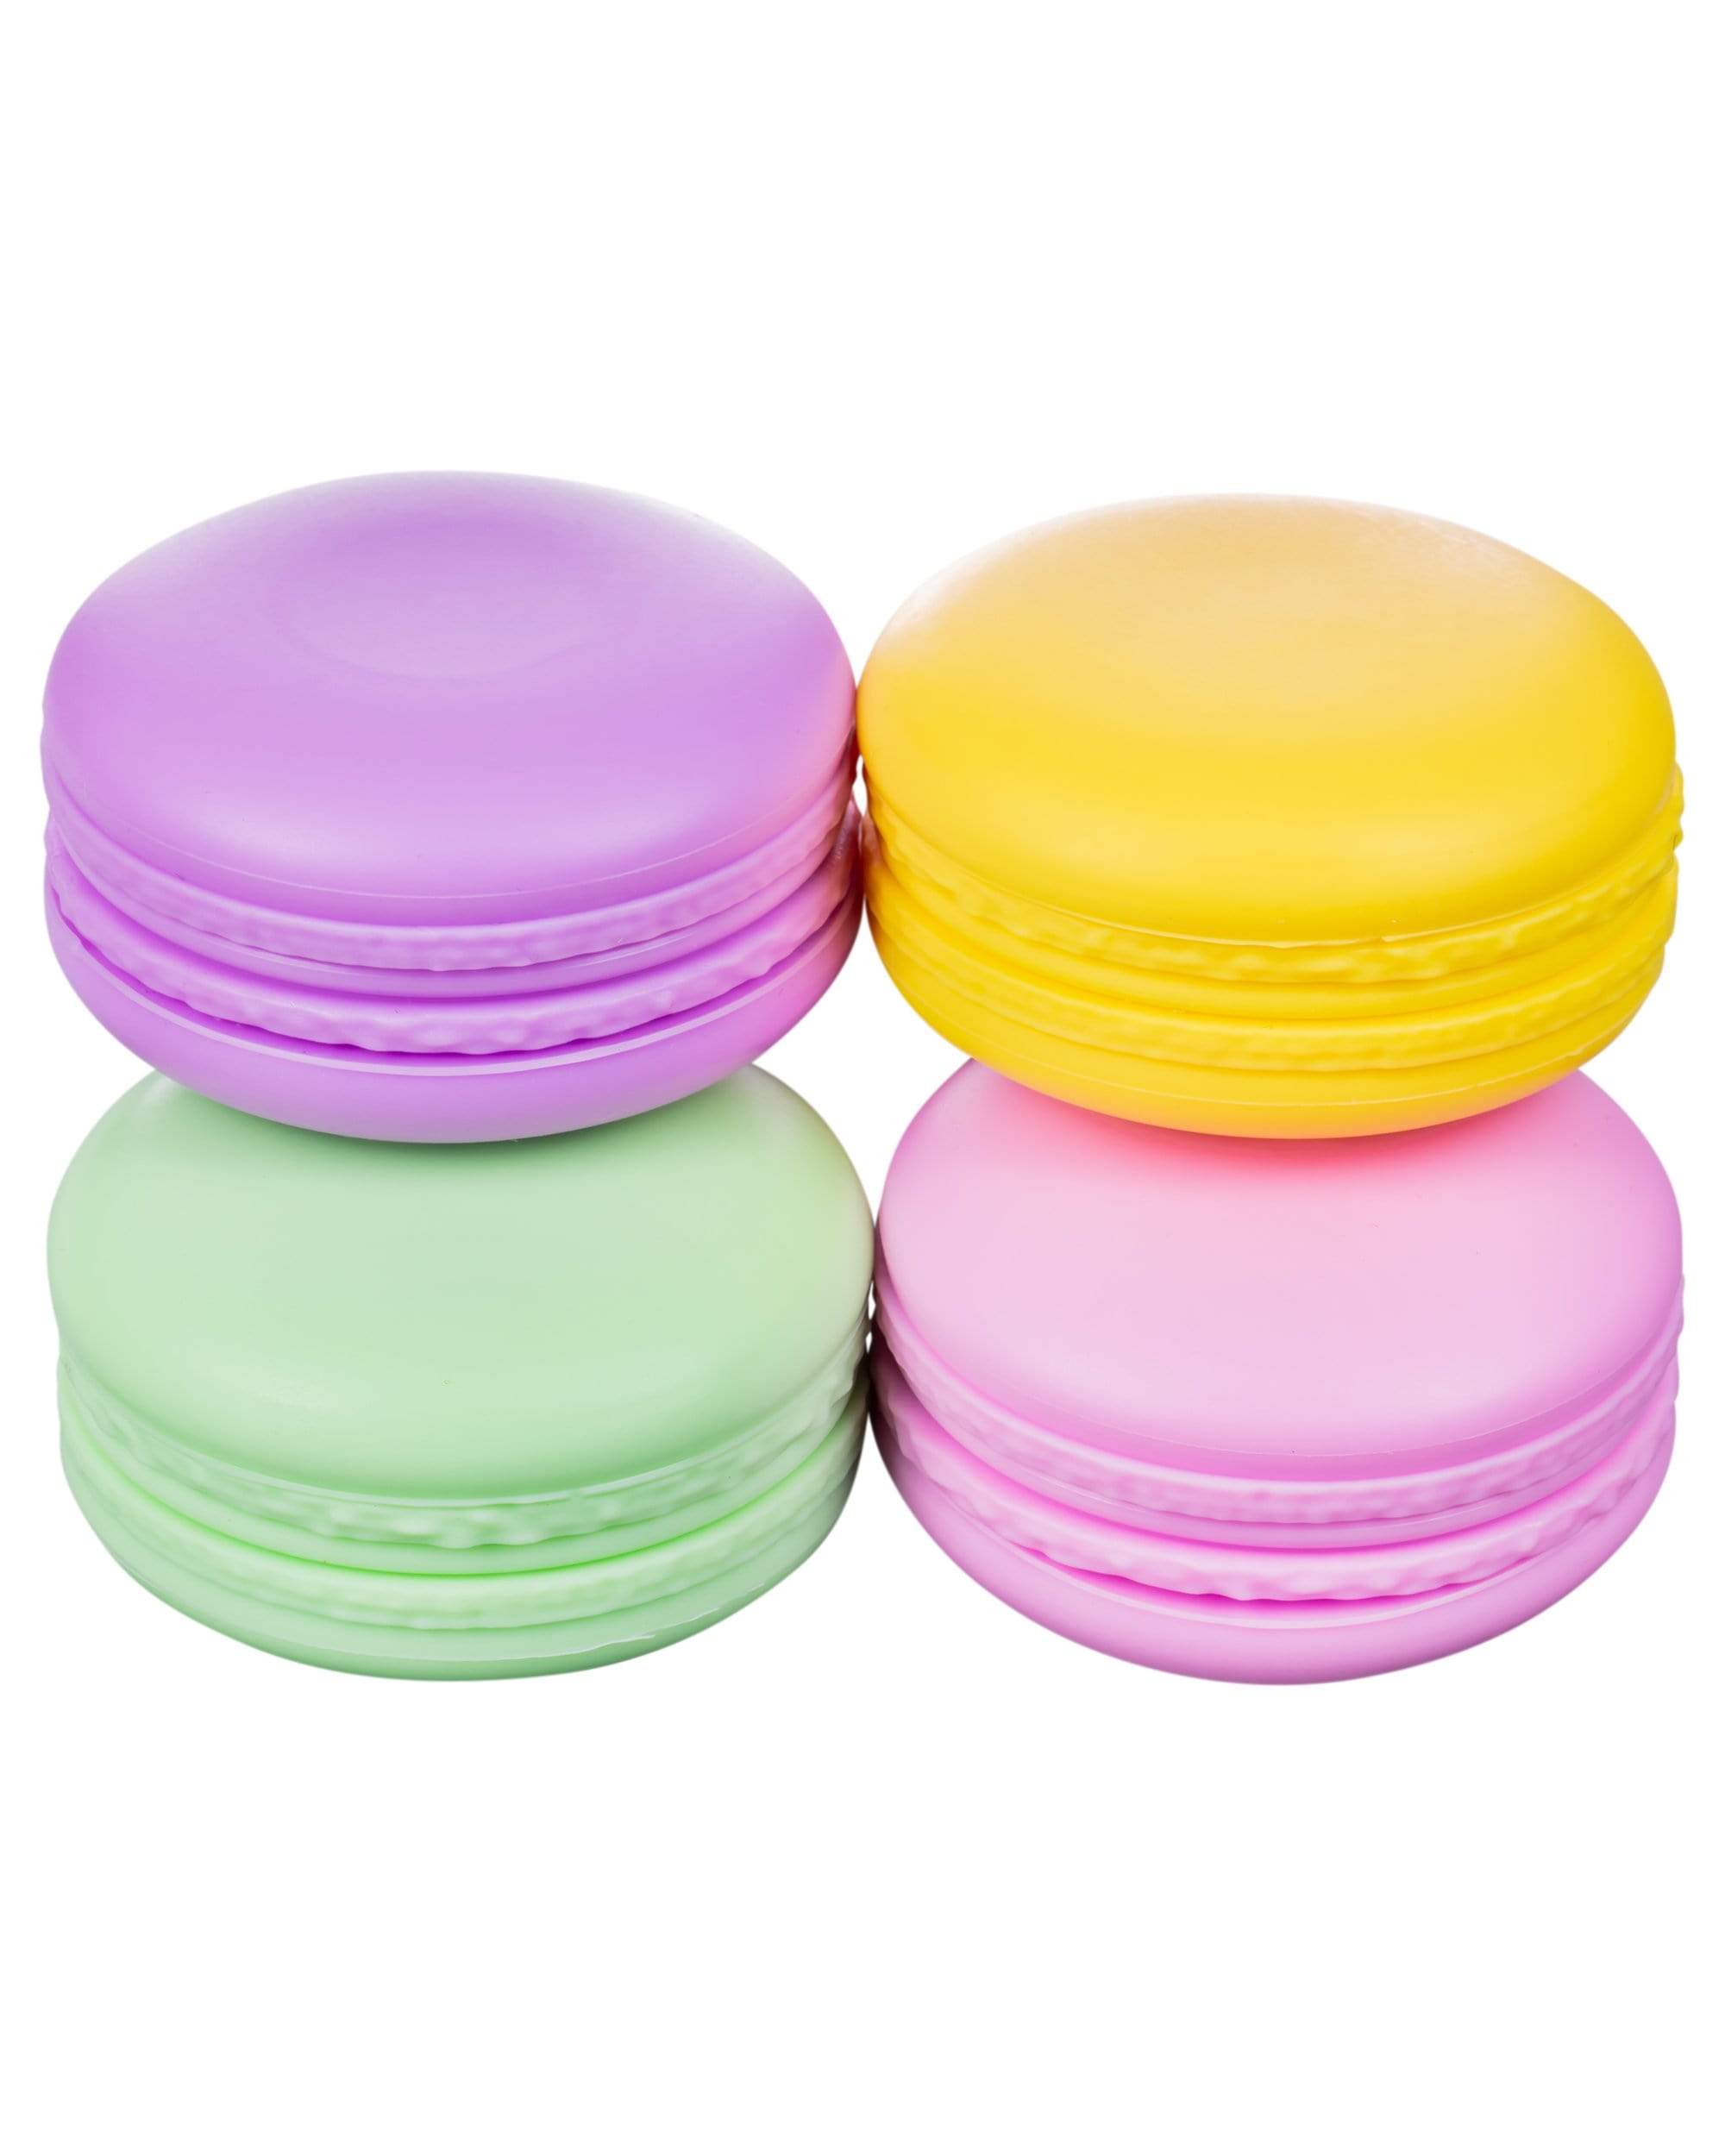 4 Pack "Waxaron" Macaron Silicone Jars